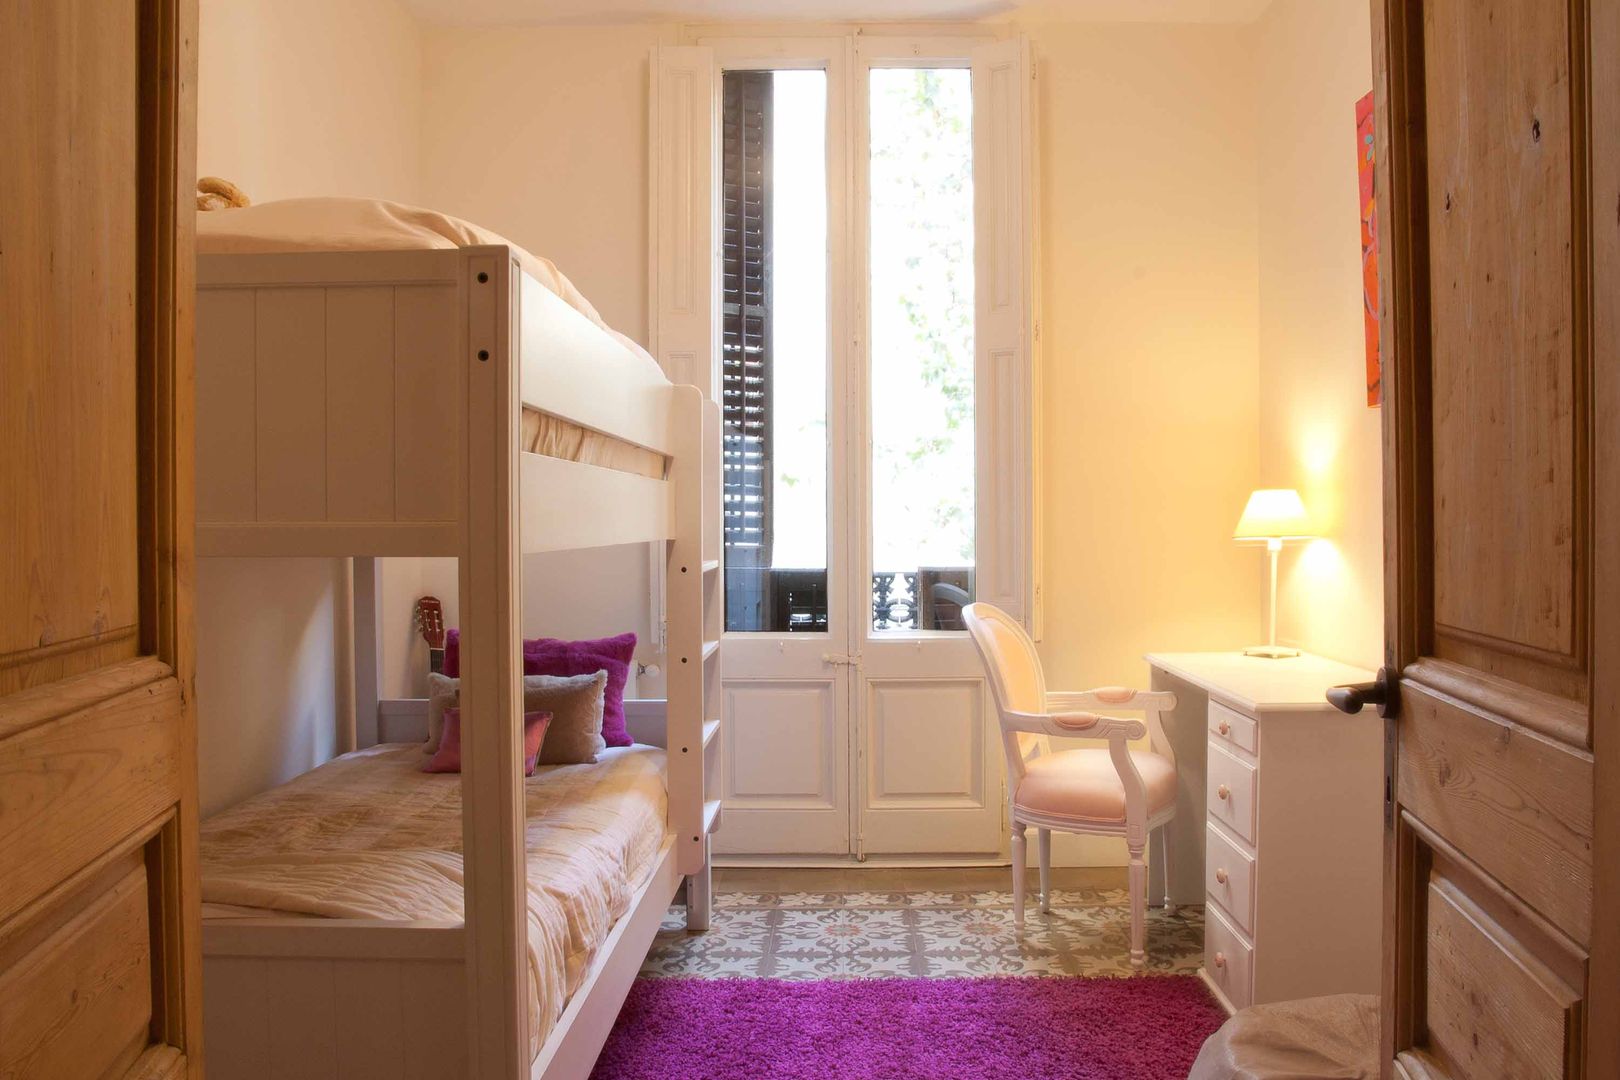 Dormitorio. Bedroom. Dormitorio infantil. Brick Serveis d'Interiorisme S.L. Habitaciones modernas